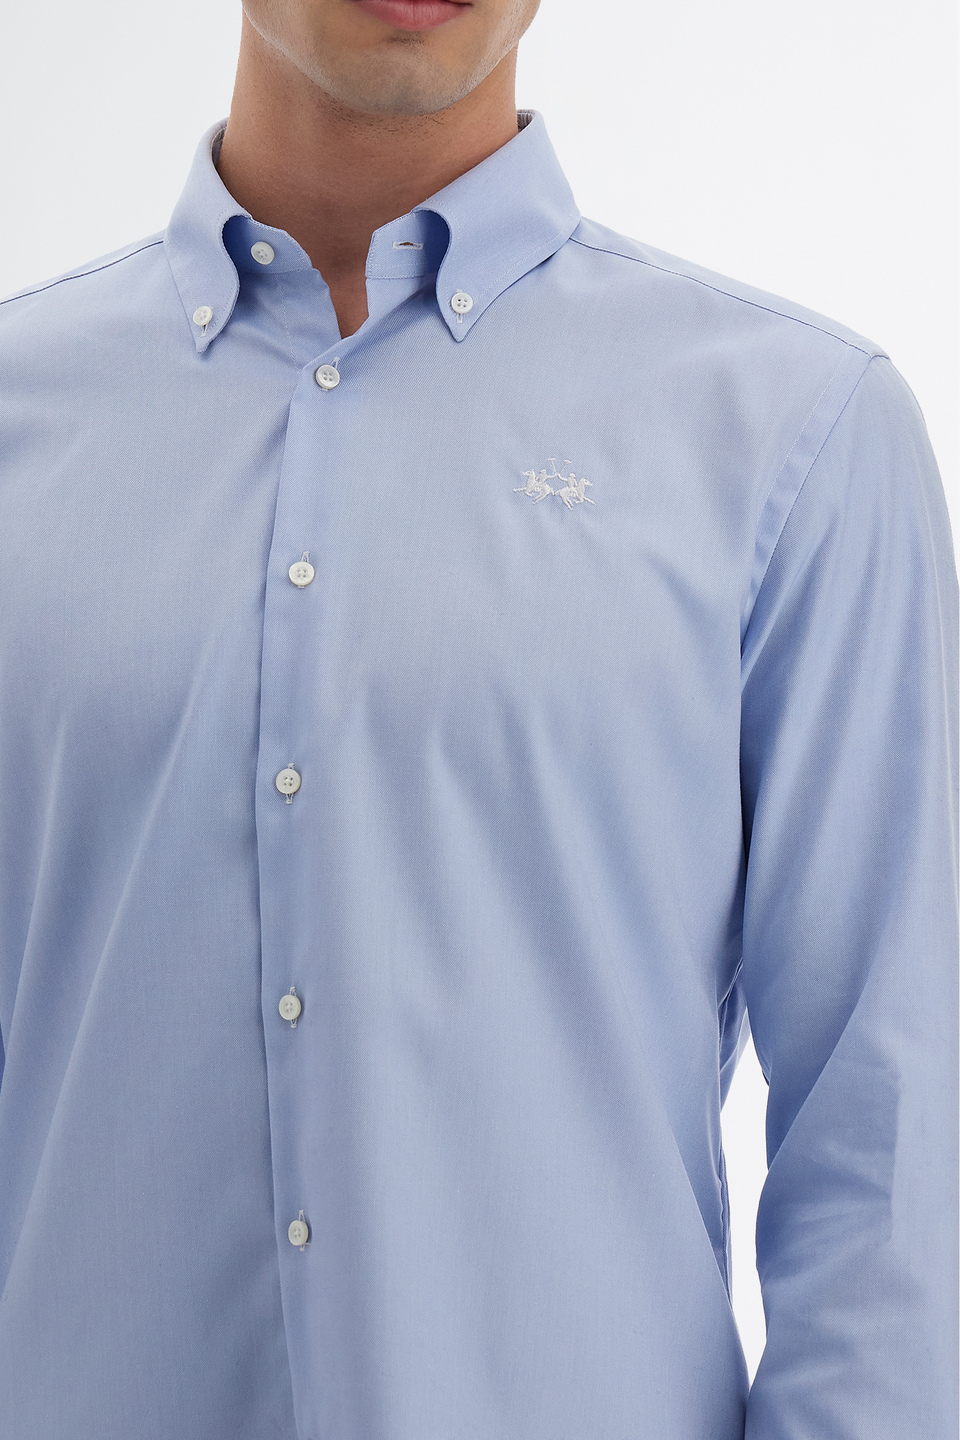 Men’s Blue Ribbon regular fit long sleeve cotton shirt | La Martina - Official Online Shop